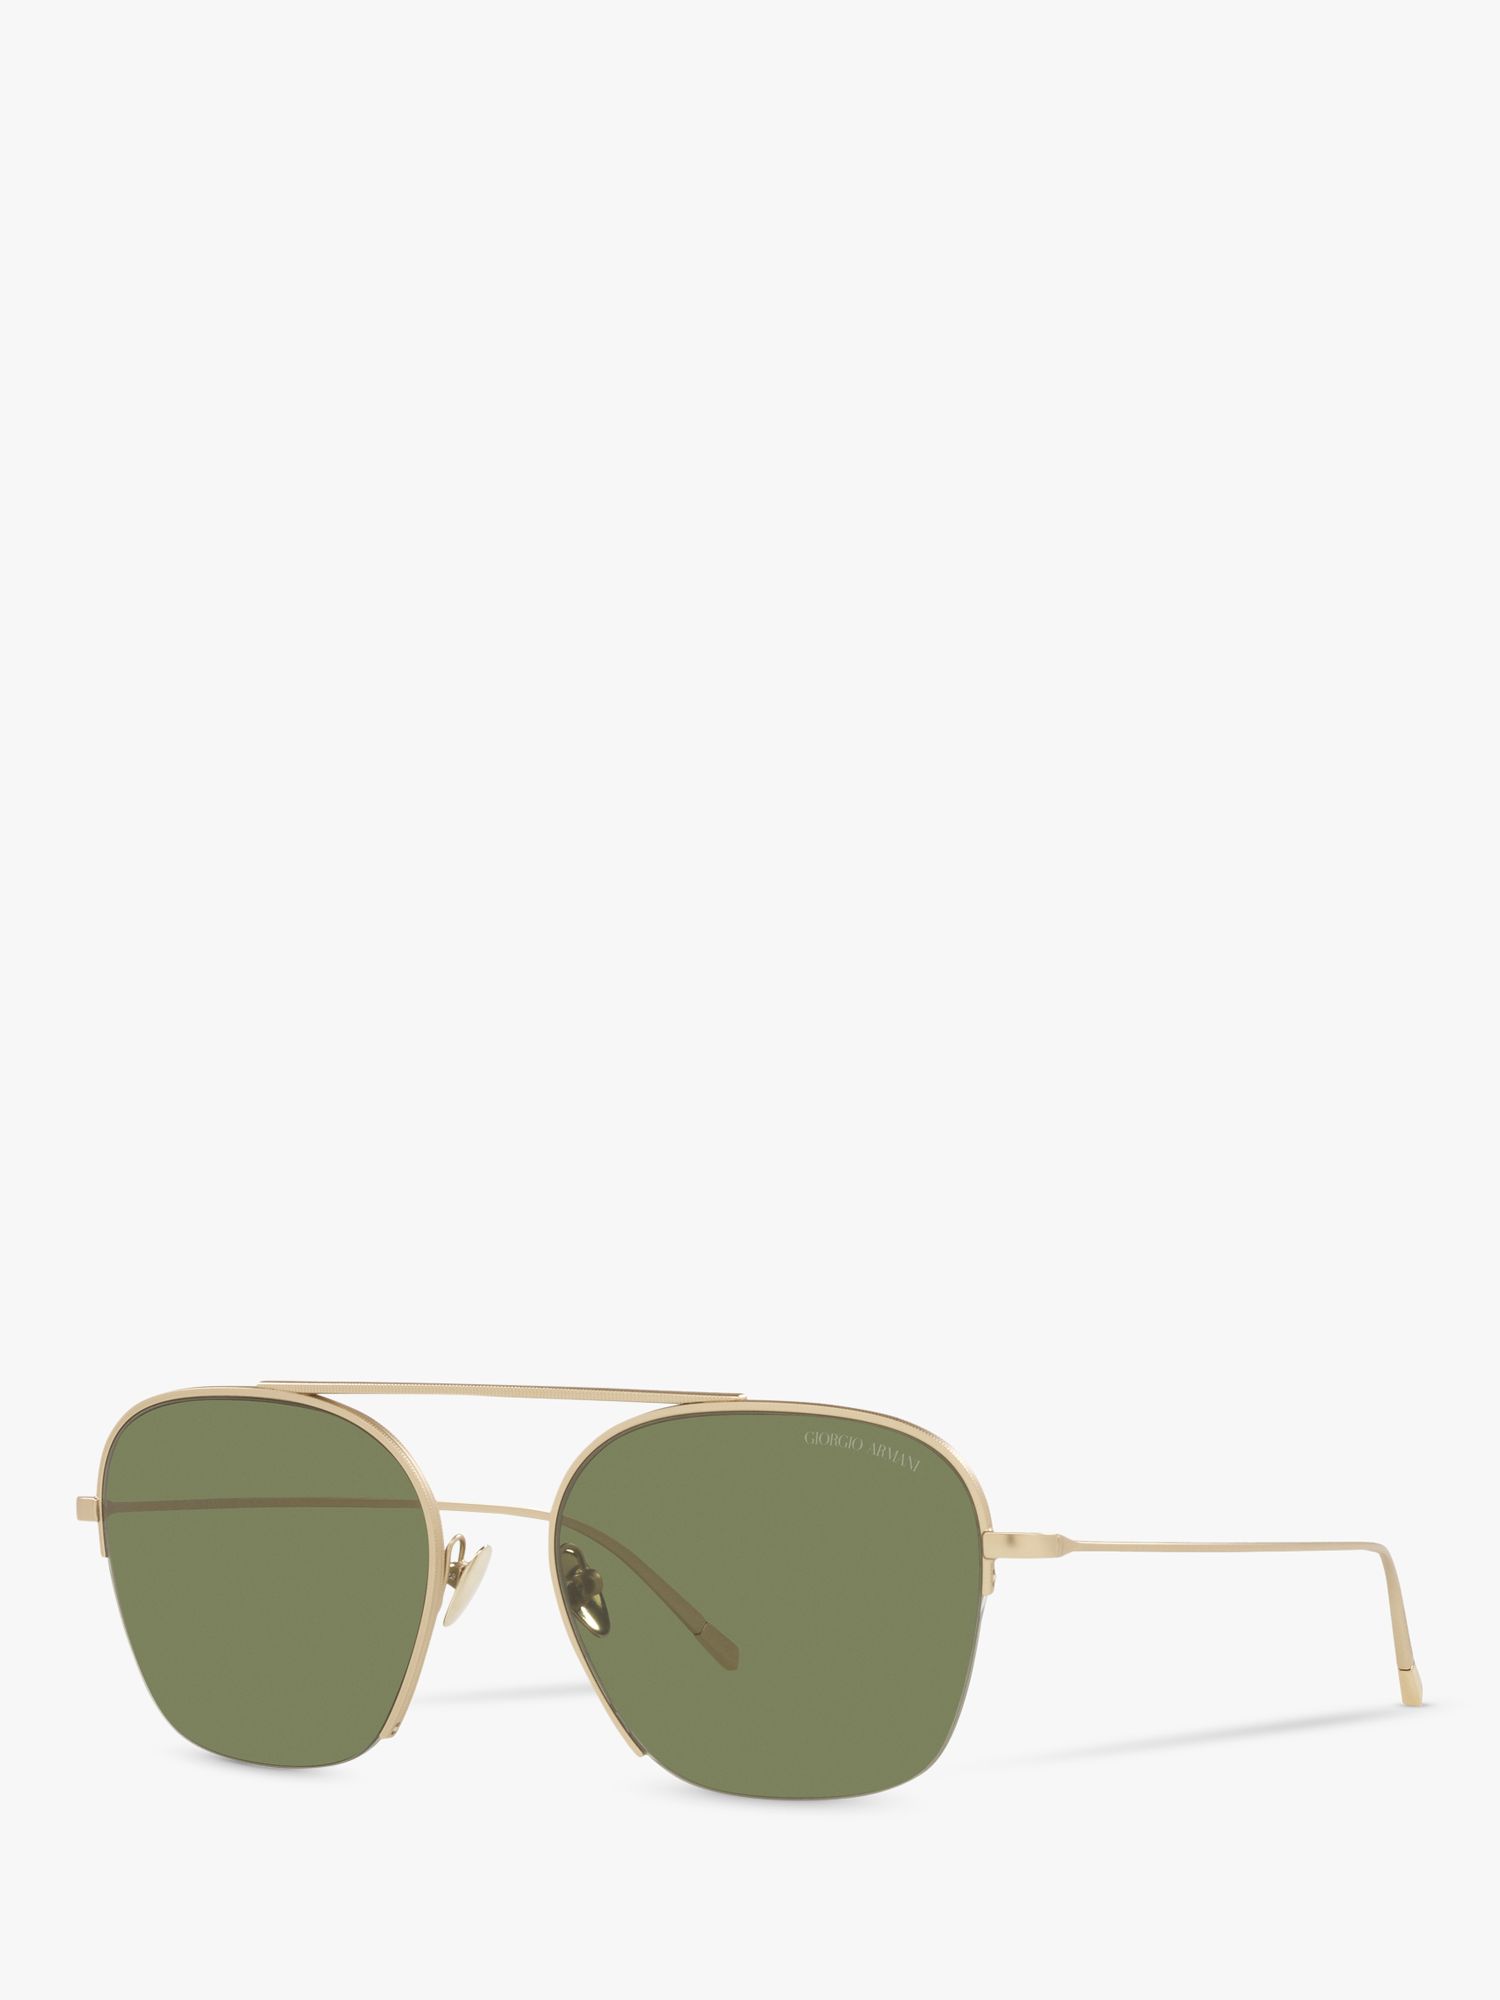 Buy Emporio Armani AR612430 Men's Square Sunglasses, Matte Pale Gold/Green Online at johnlewis.com